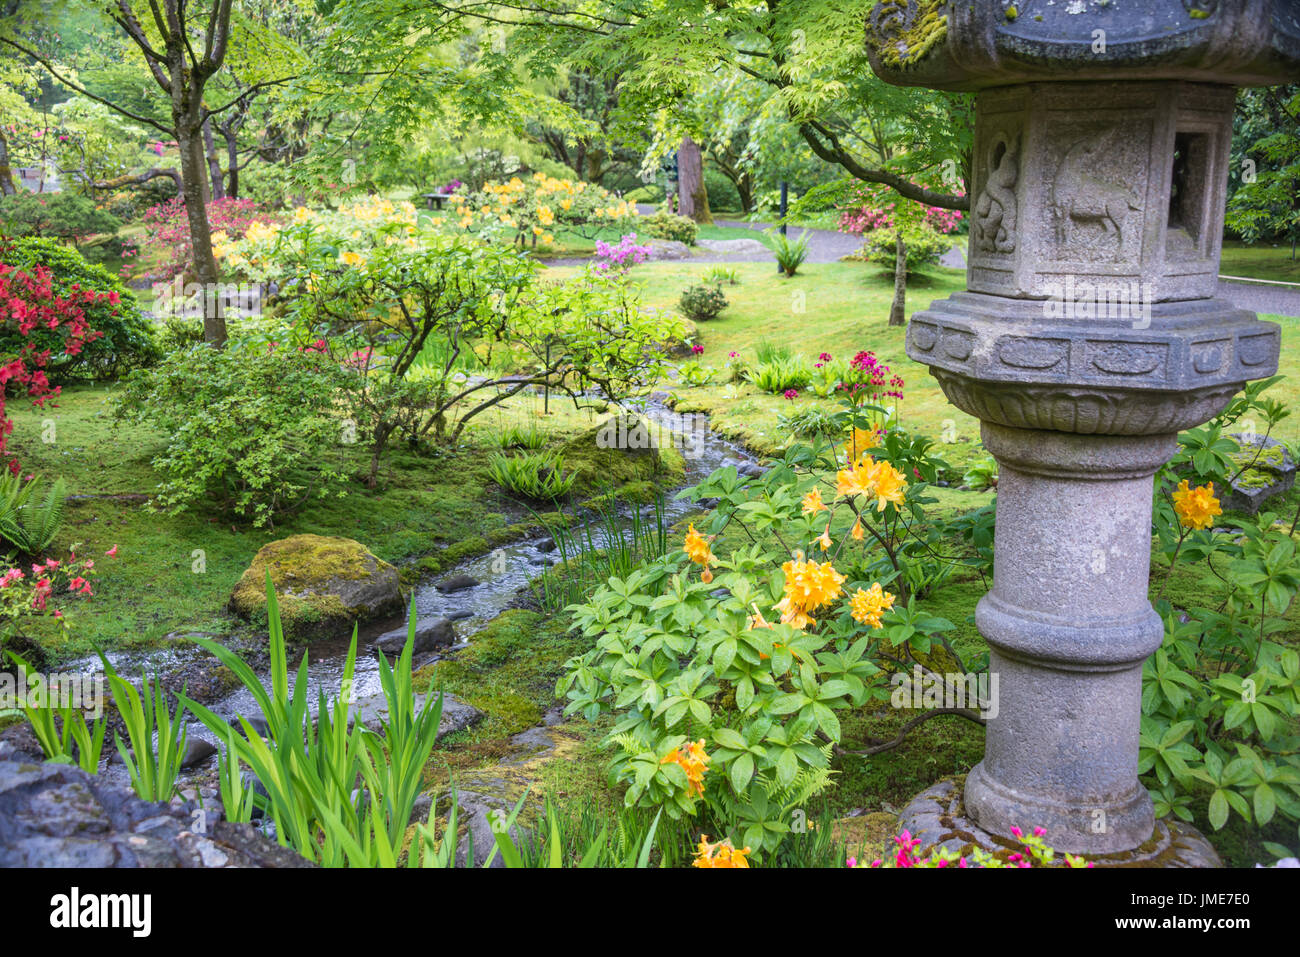 Stone Lantern near Meandering Stream in Flowering Japanese Garden Stock Photo